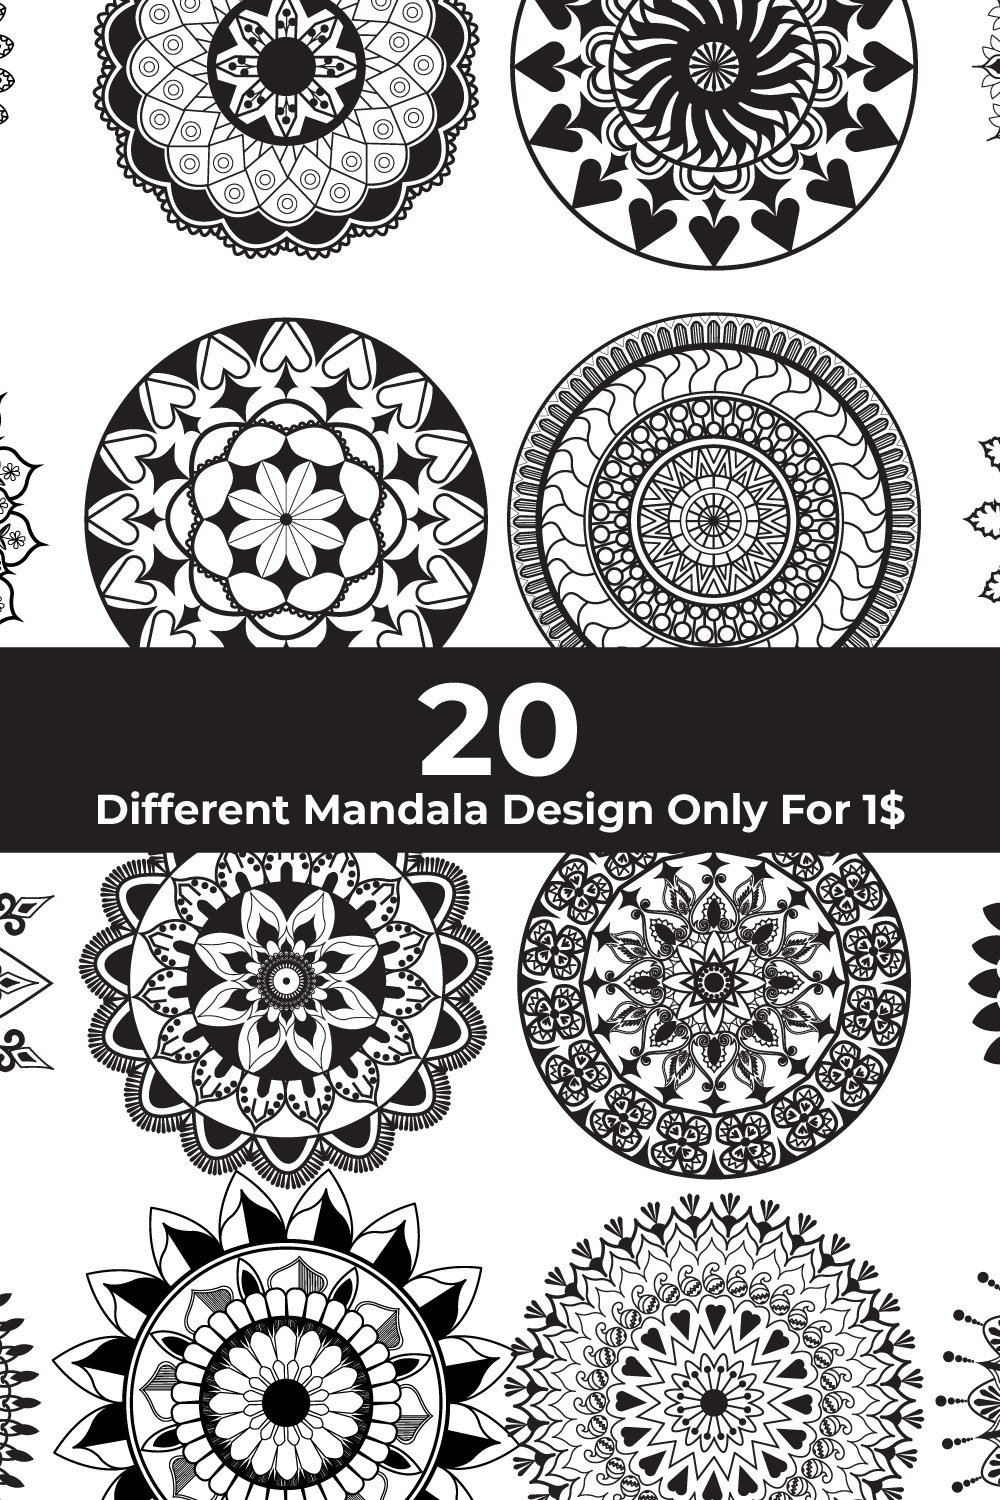 20 Different Mandala Design Only For $1 pinterest image.